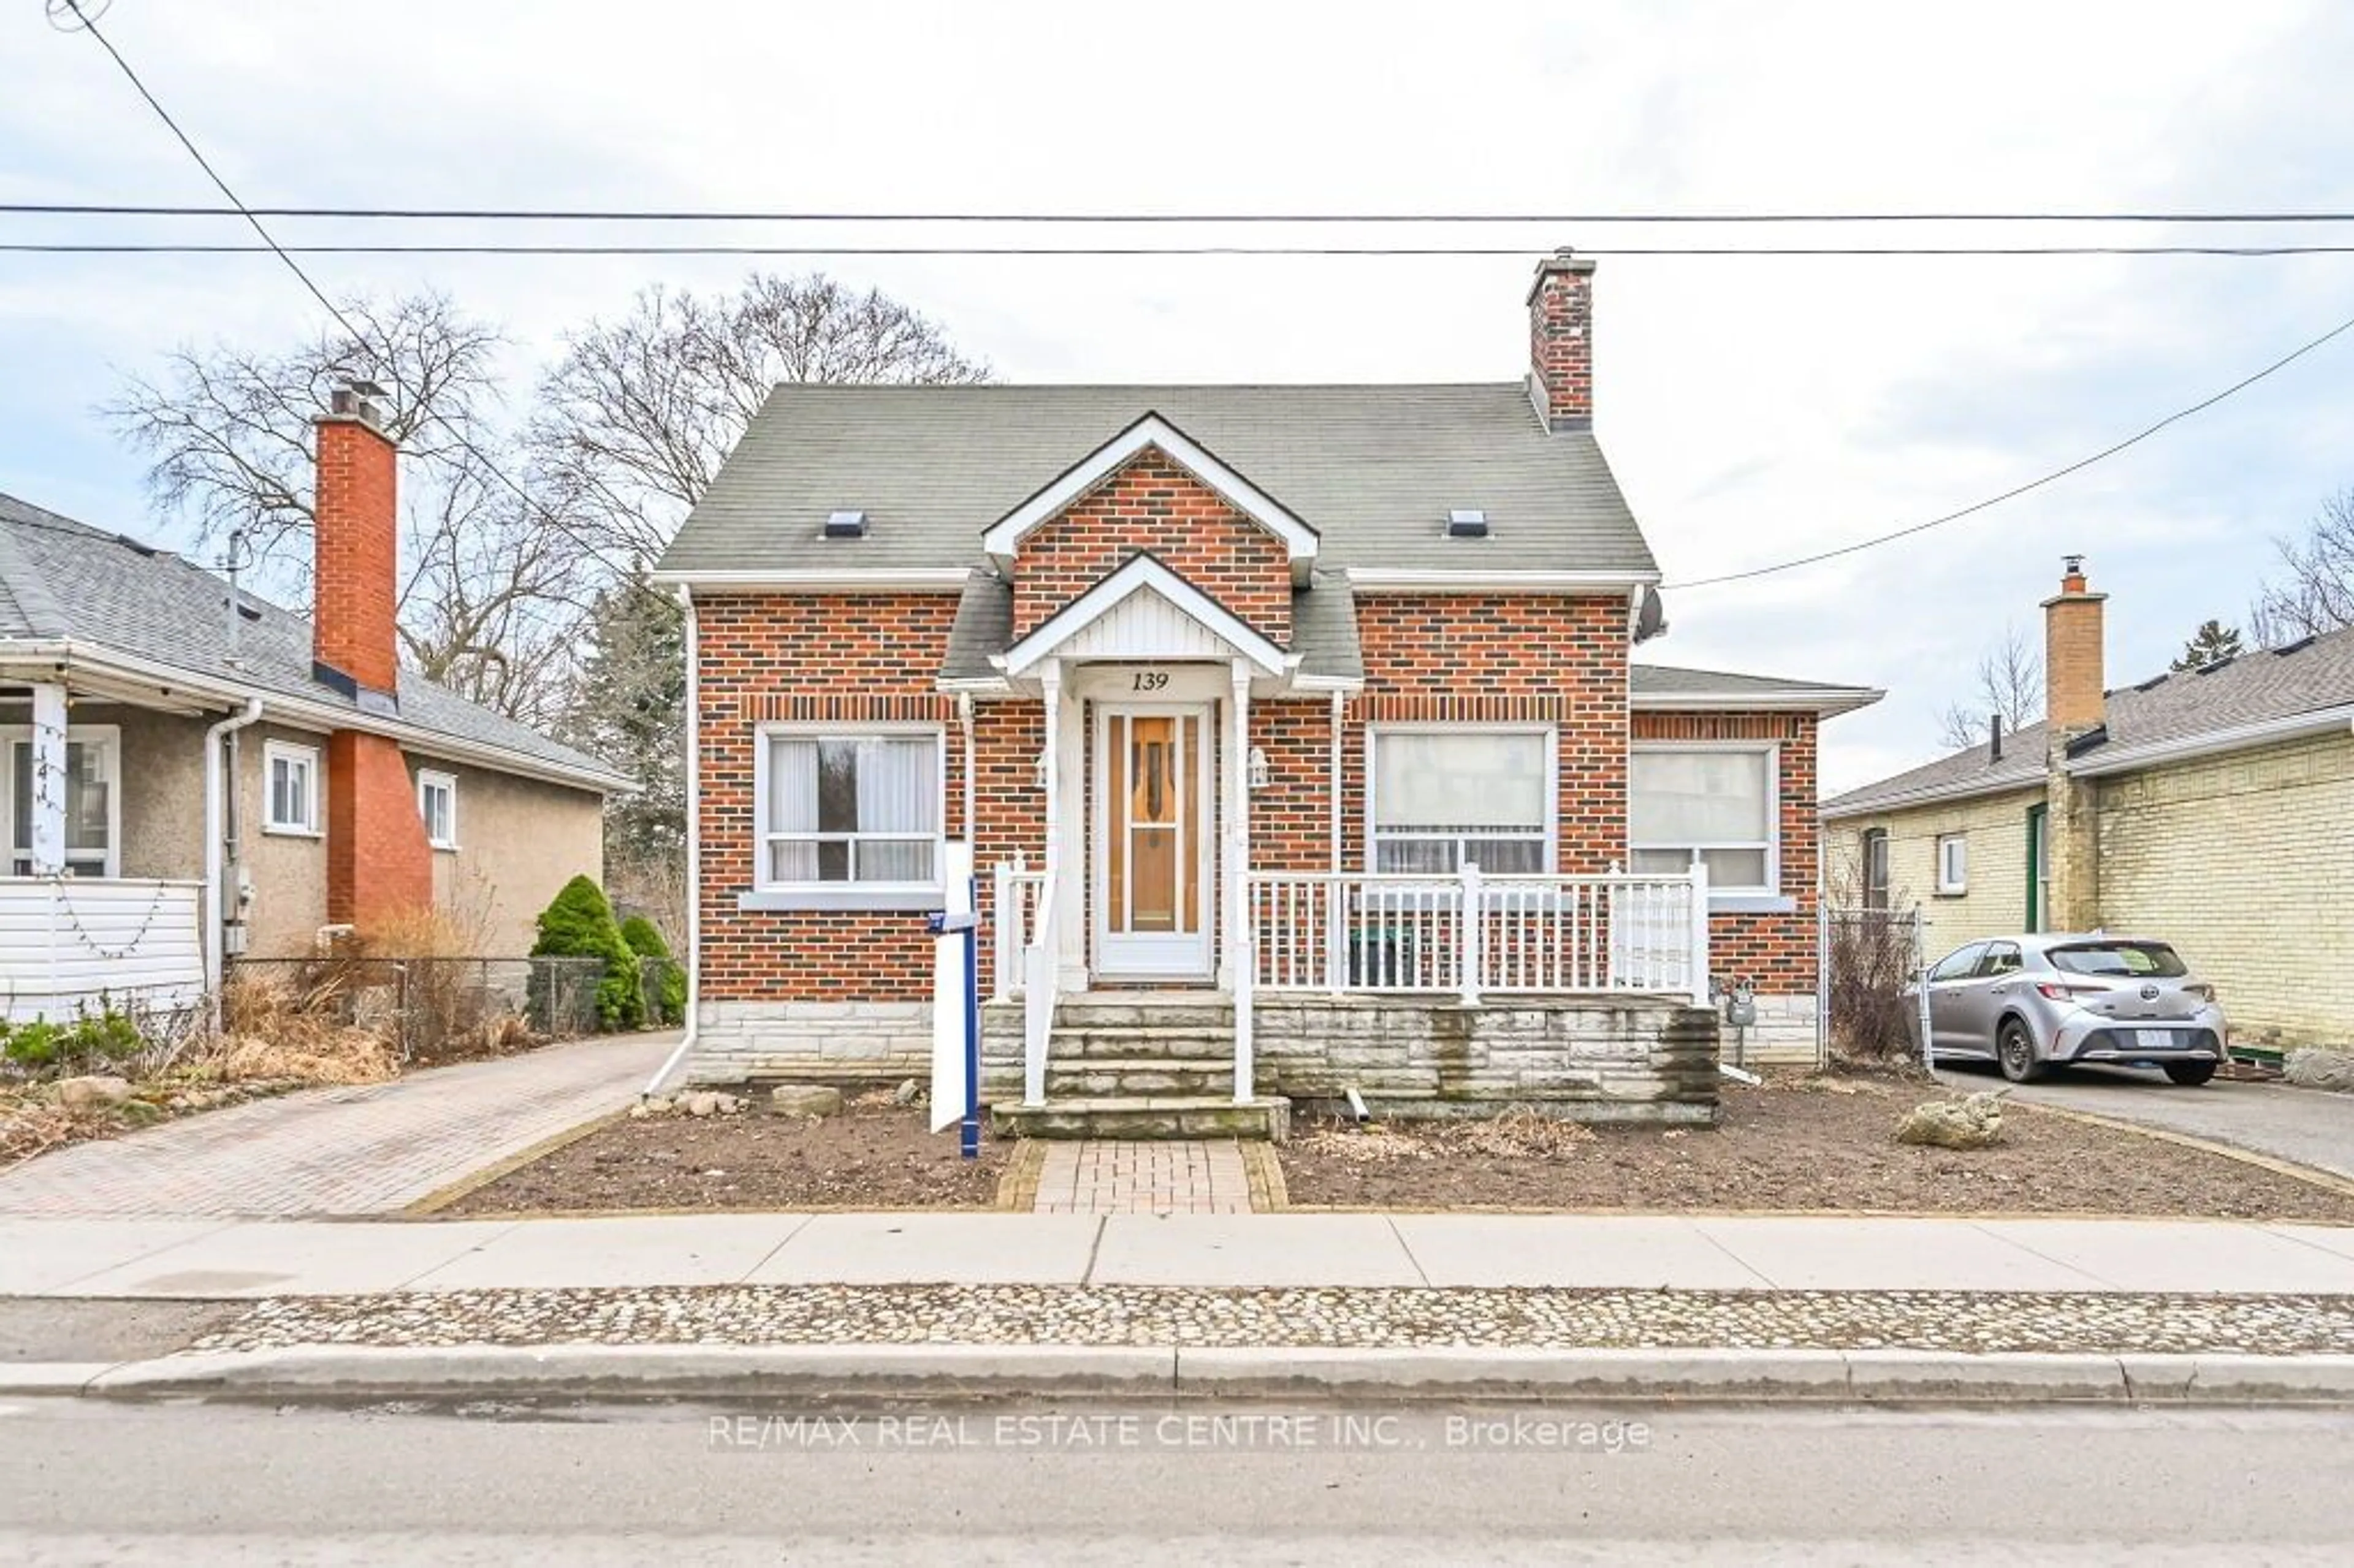 Home with brick exterior material for 139 York Rd, Guelph Ontario N1E 3E8